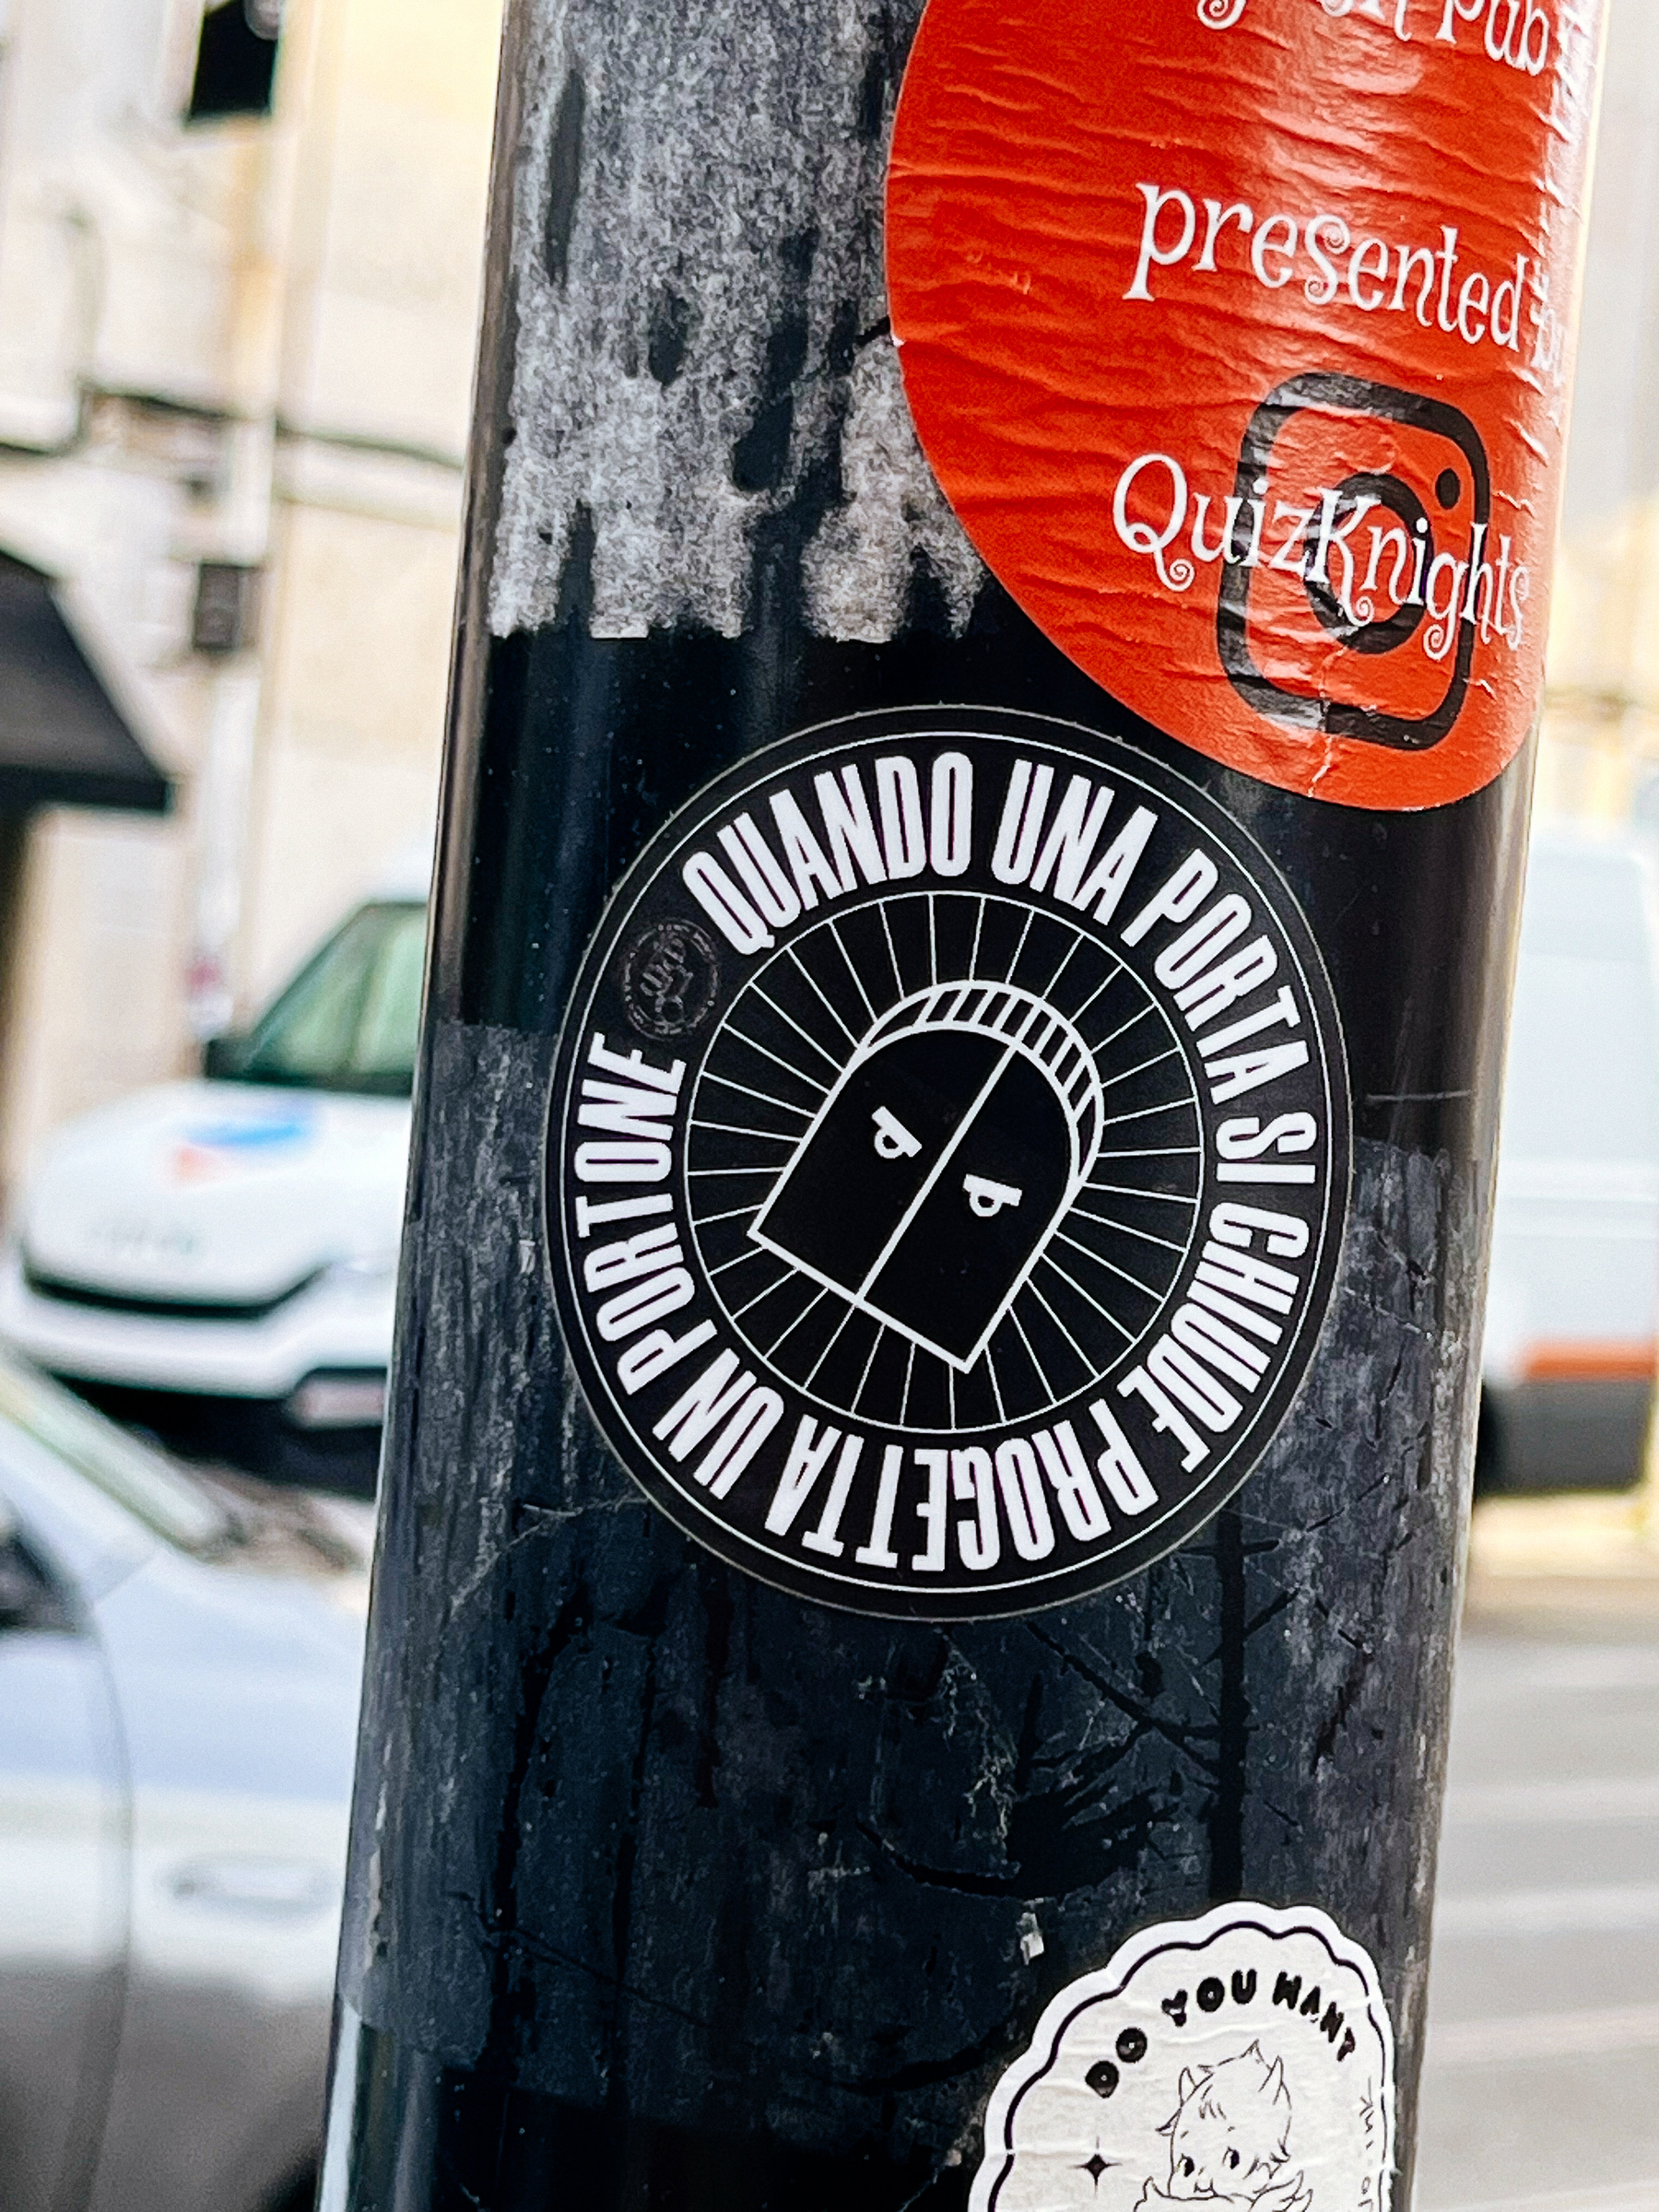 Stickers on a pole with one featuring text &ldquo;QUANDO UNA PORTA SI CHIUDE PROGETTA UN PORTONE&rdquo;, and a mean looking door.